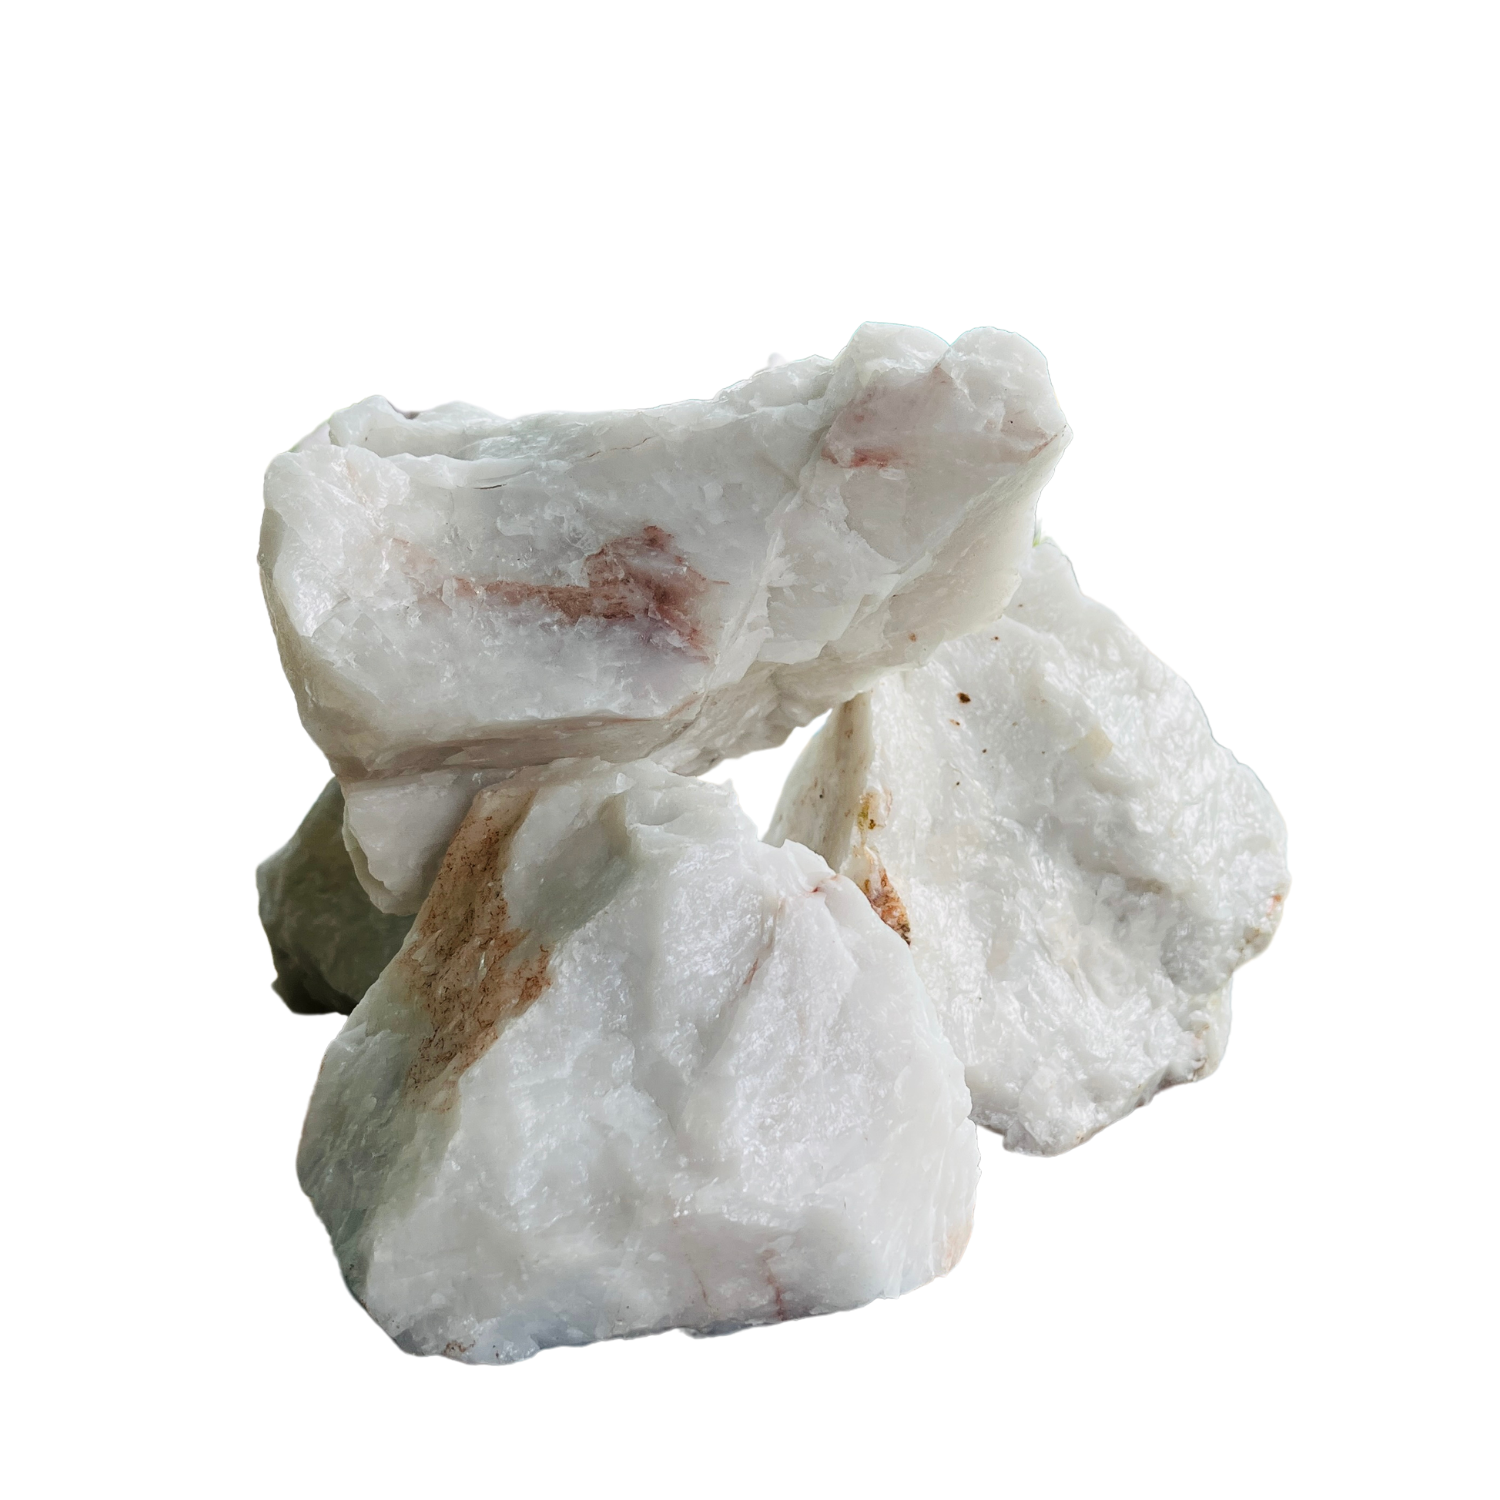 White Marble Rock Stone for Decoration |Garden|Table| Home Decor|Vase Fillers|Auqarium